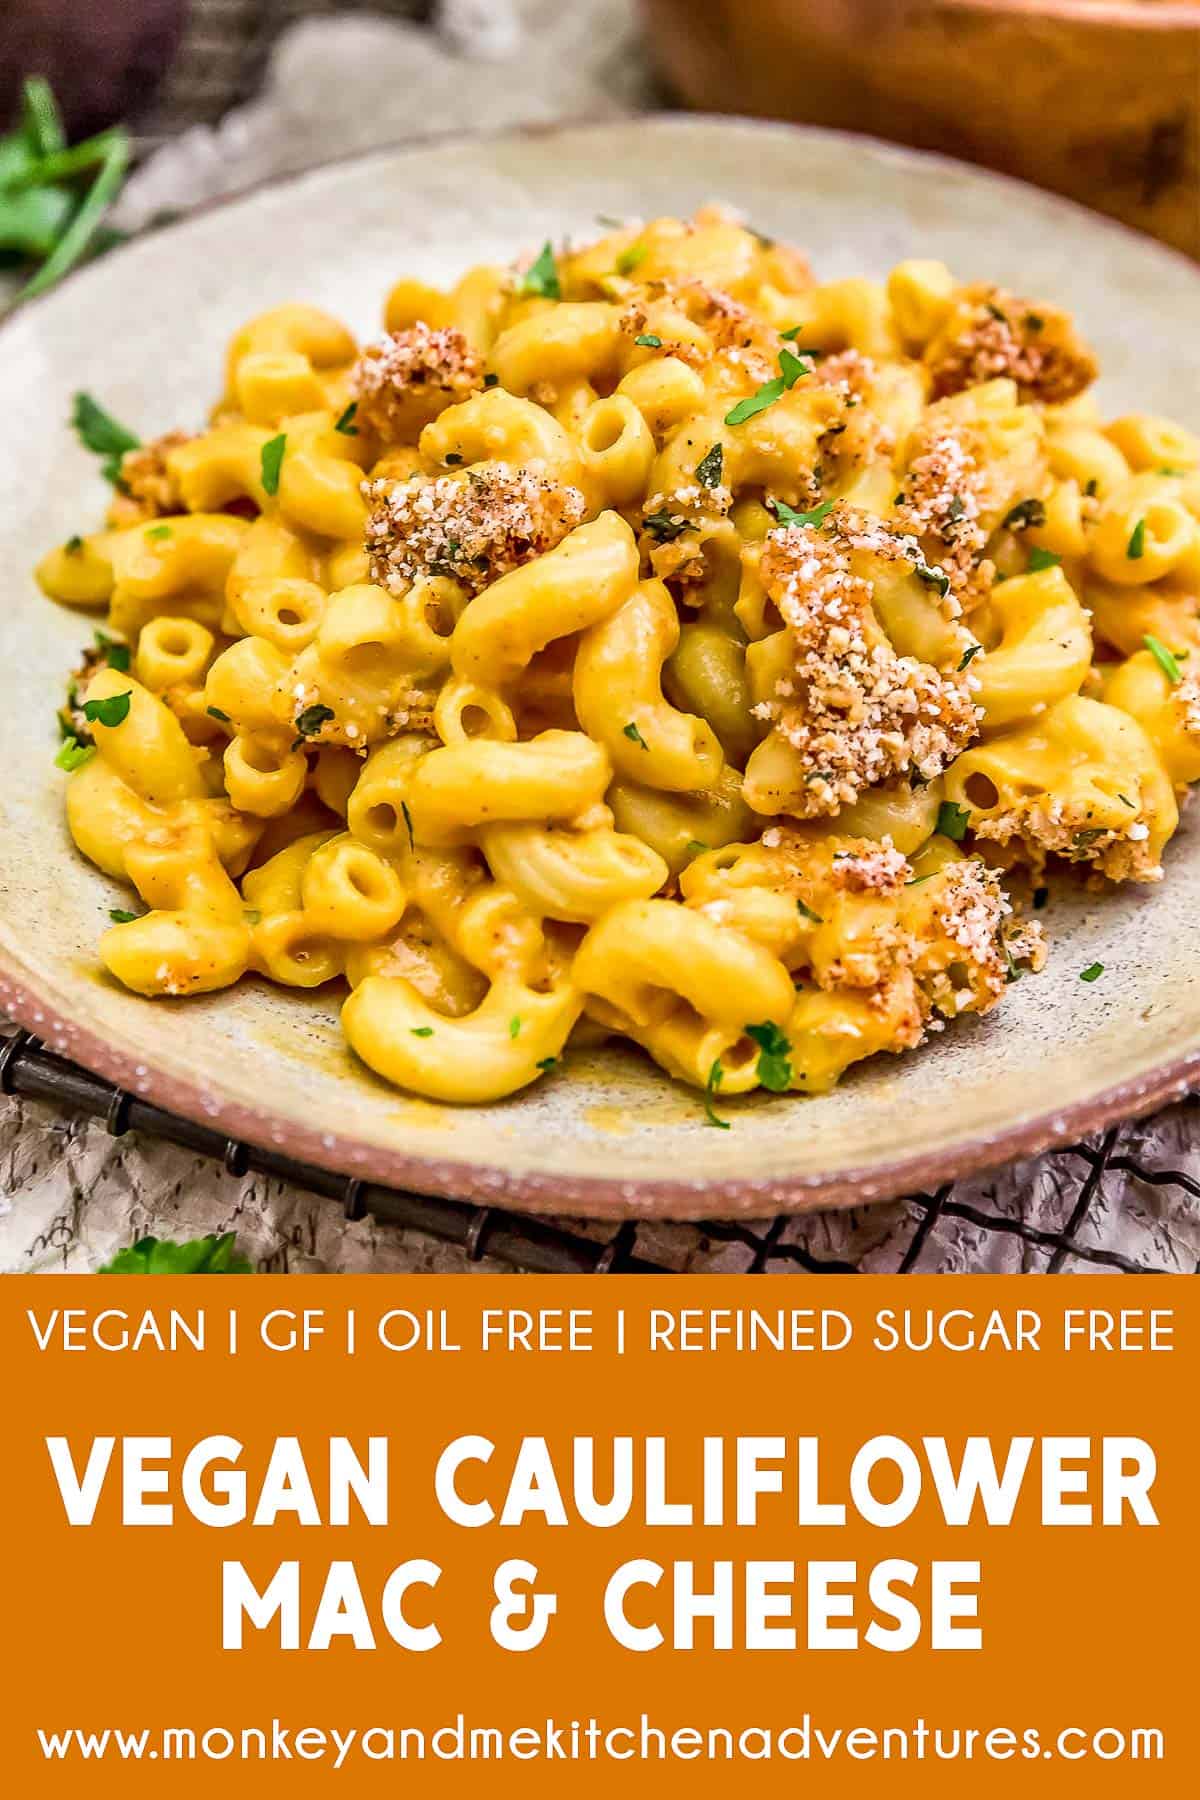 Vegan Cauliflower Mac and Cheese with text description